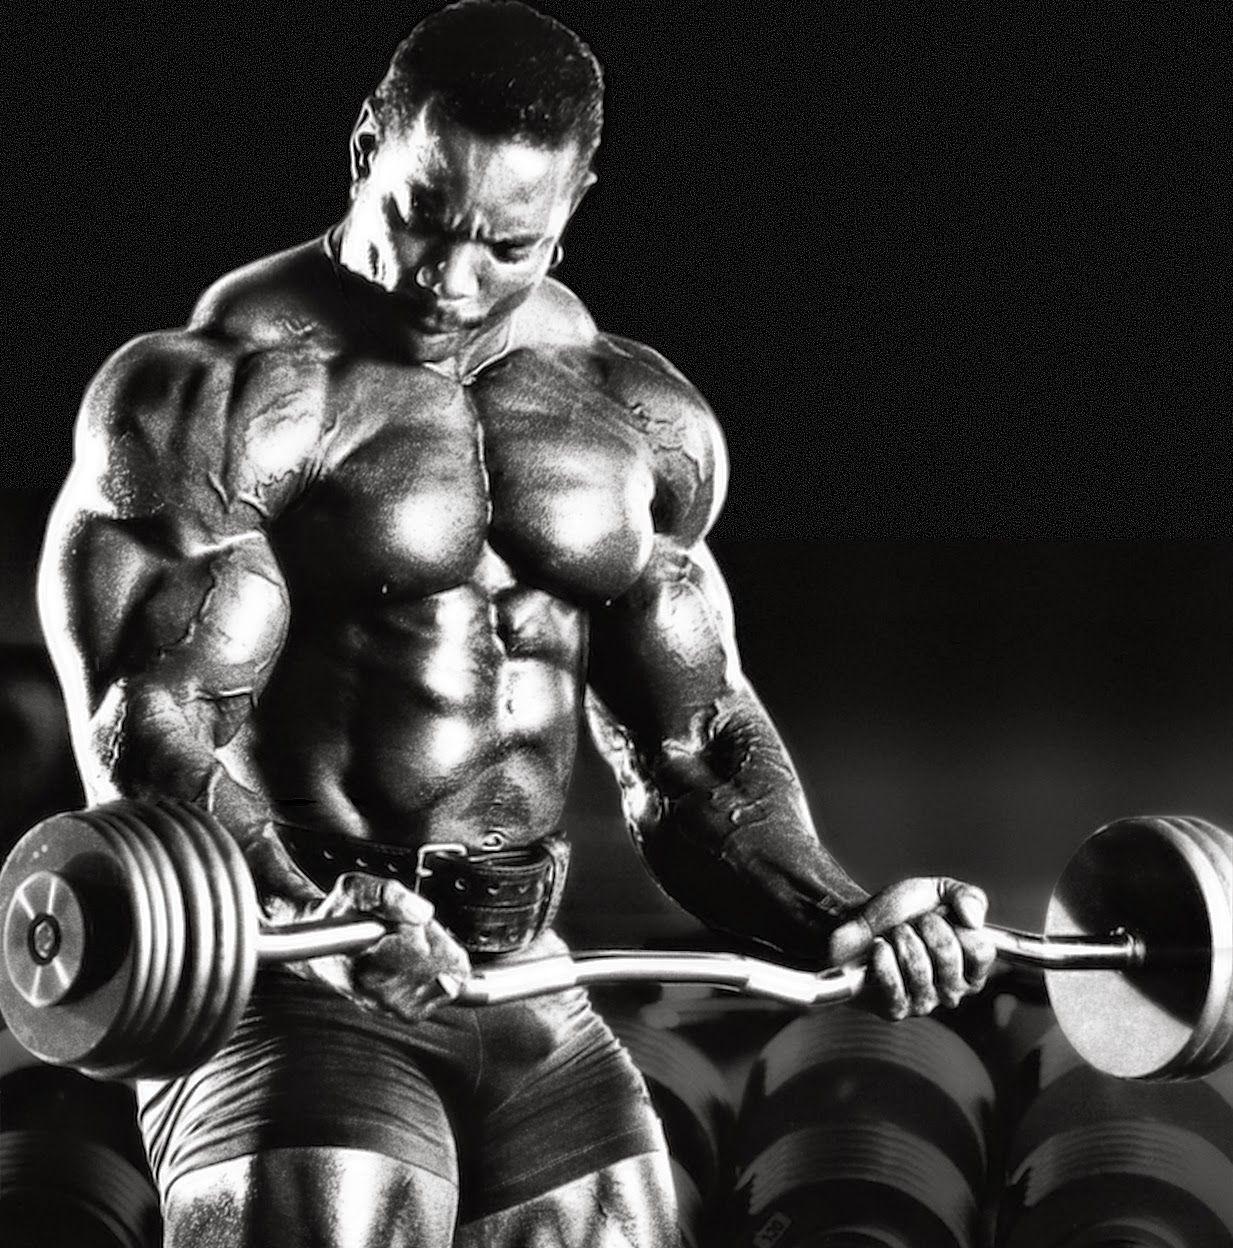 Bodybuilder Flex Wheeler image & wallpaper. Bodybuilding Image